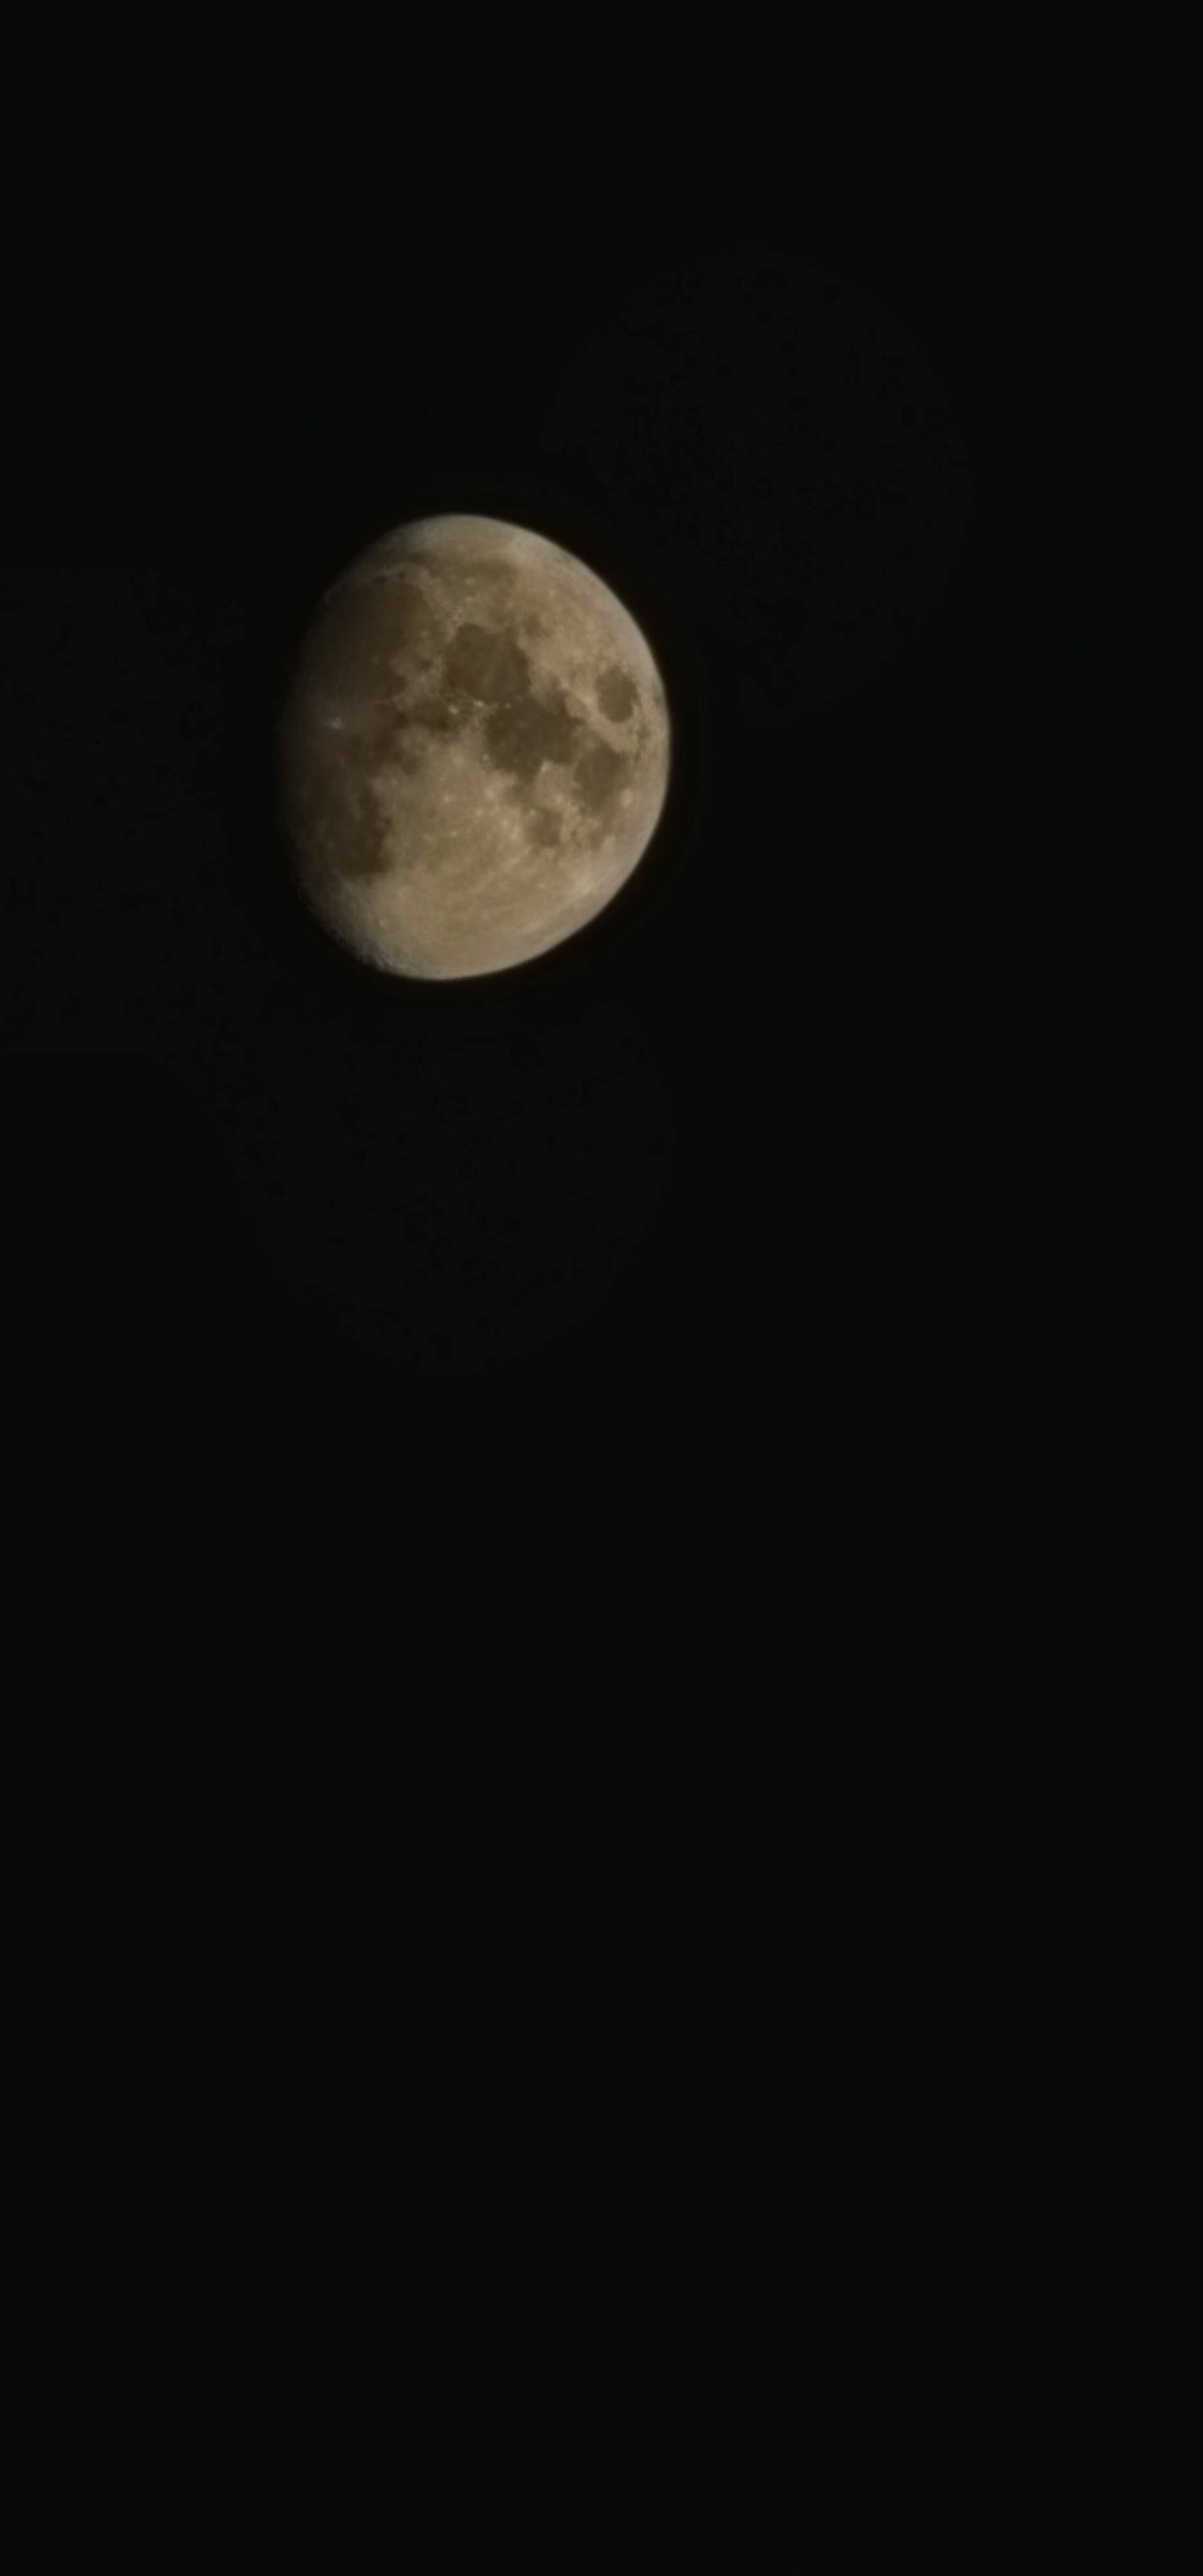 A full moon in the sky - Moon